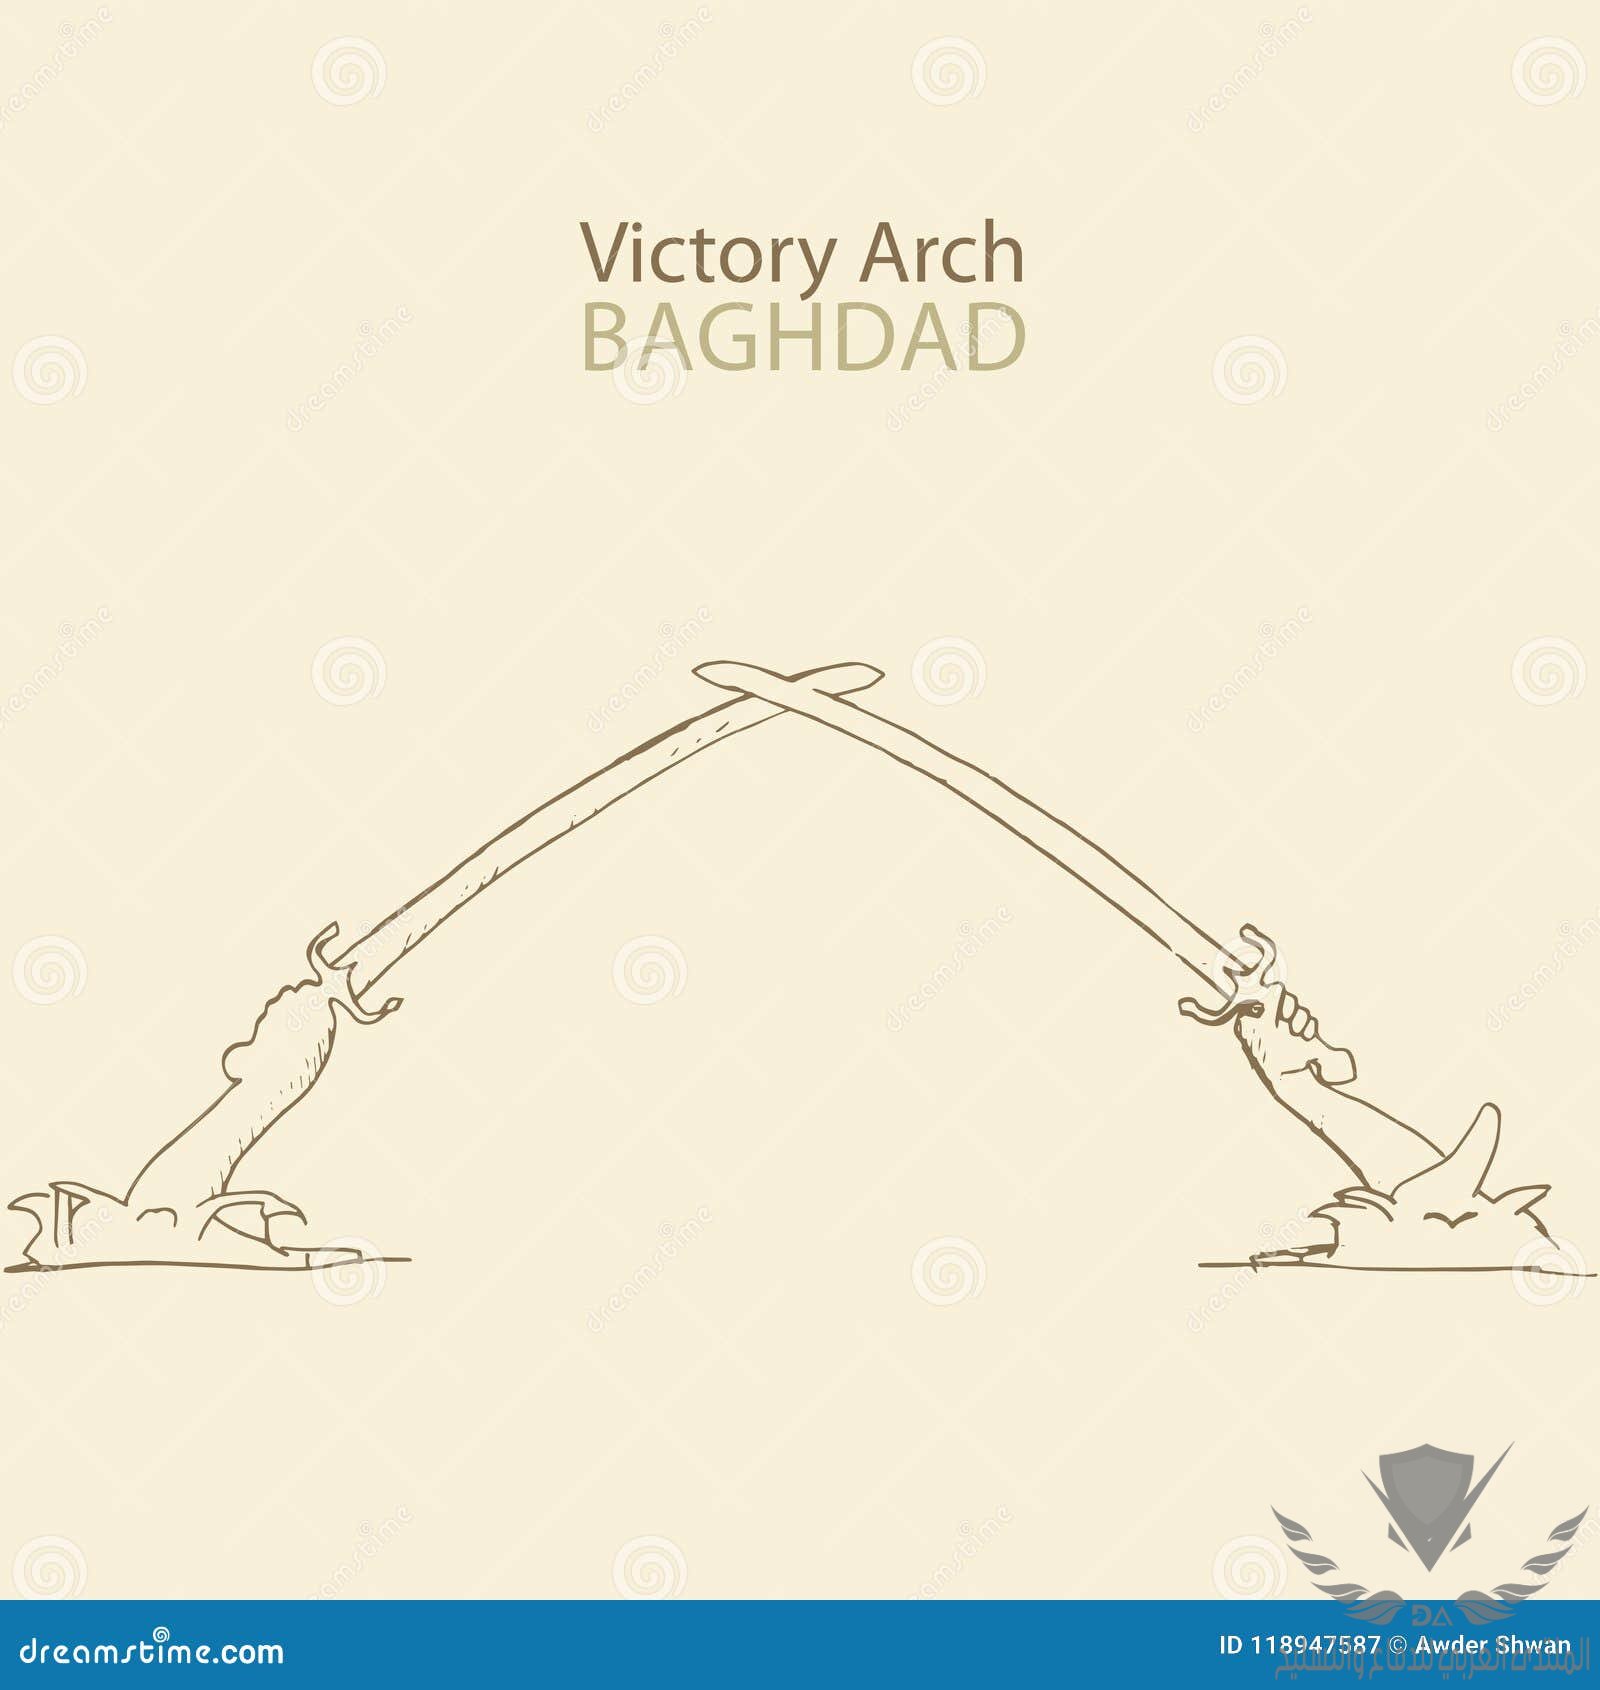 hand-drawn-arch-victory-located-baghdad-iraq-arch-victory-baghdad-iraq-118947587.jpg